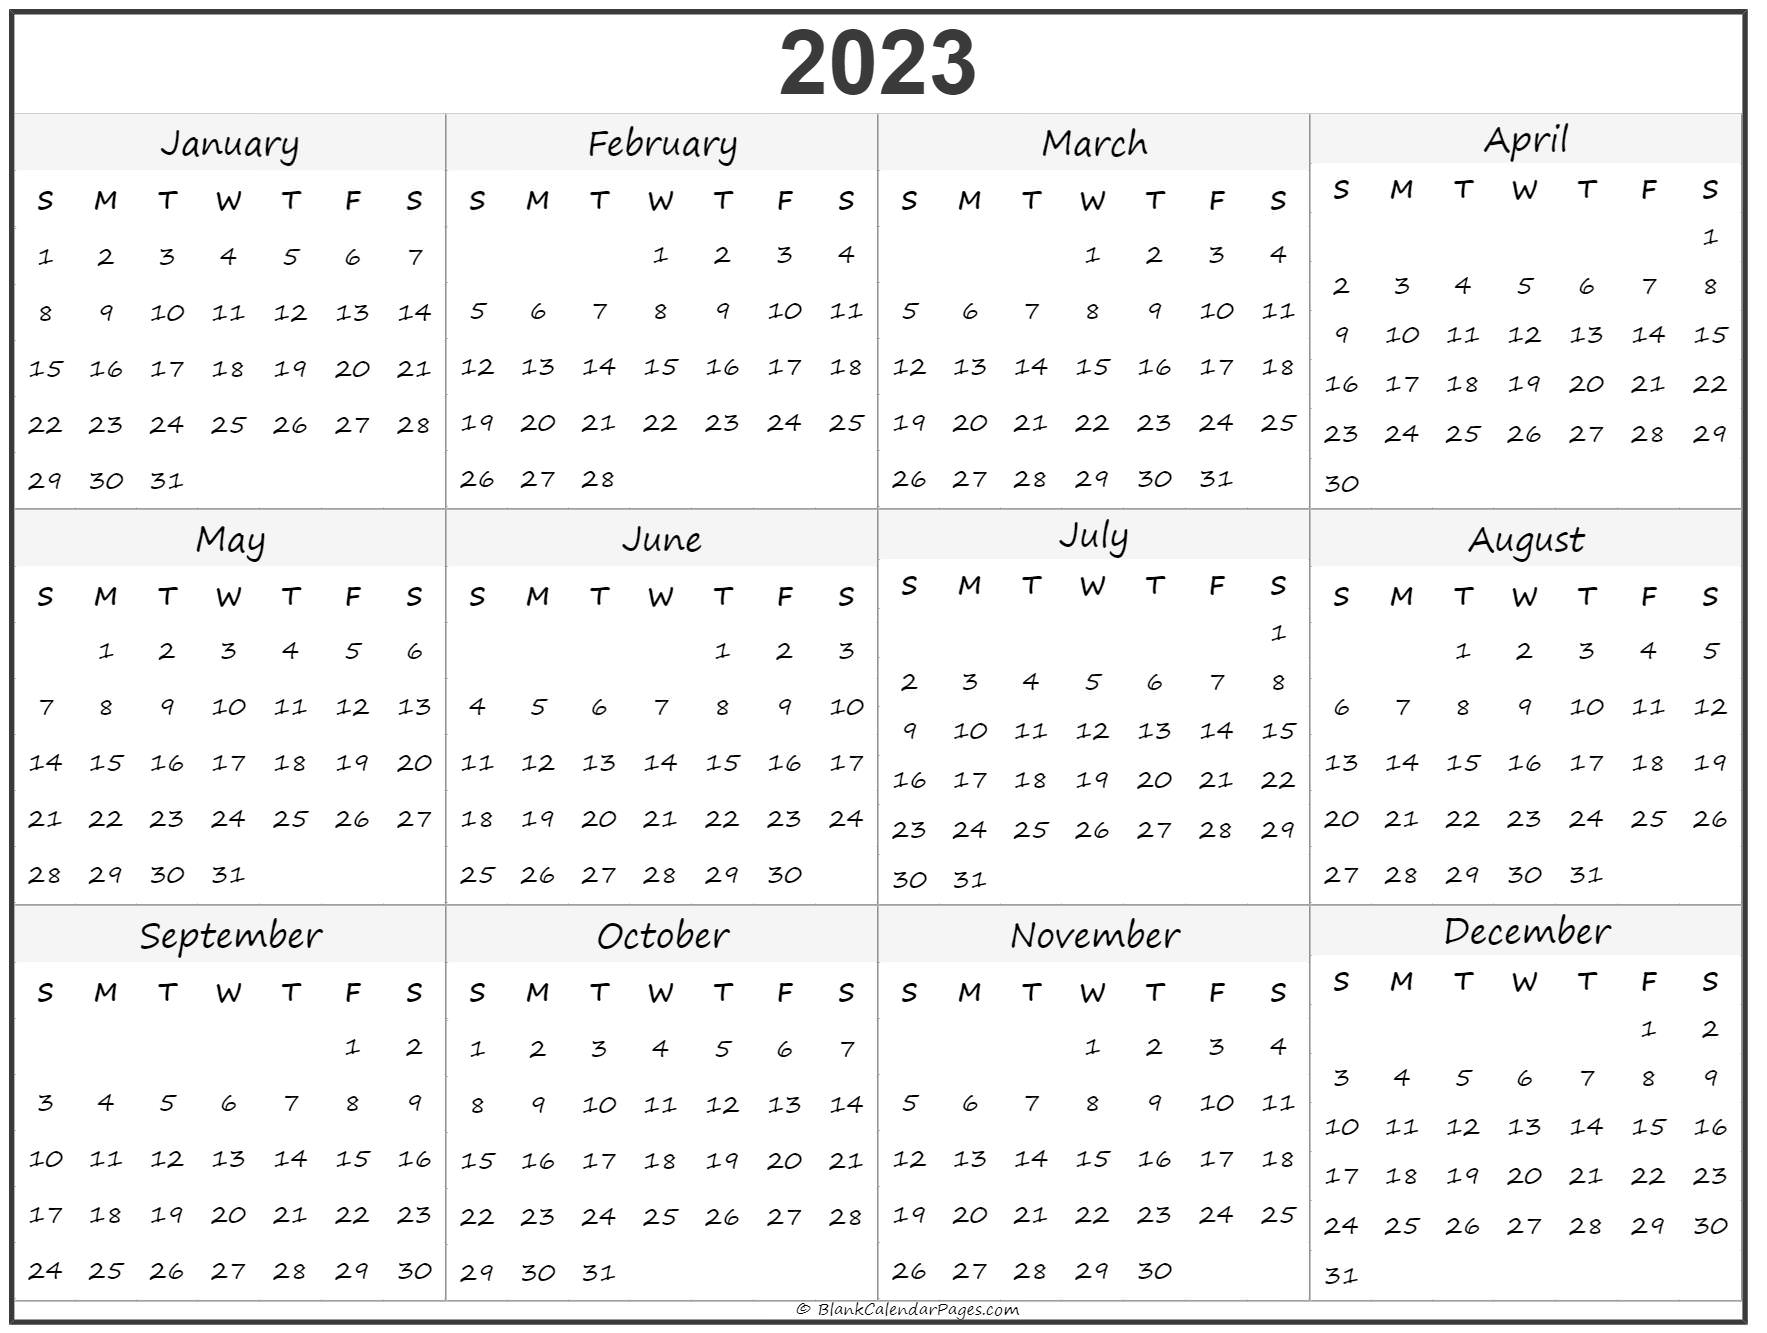 free printable calendar 2023 template in pdf - 2023 calendar templates ...